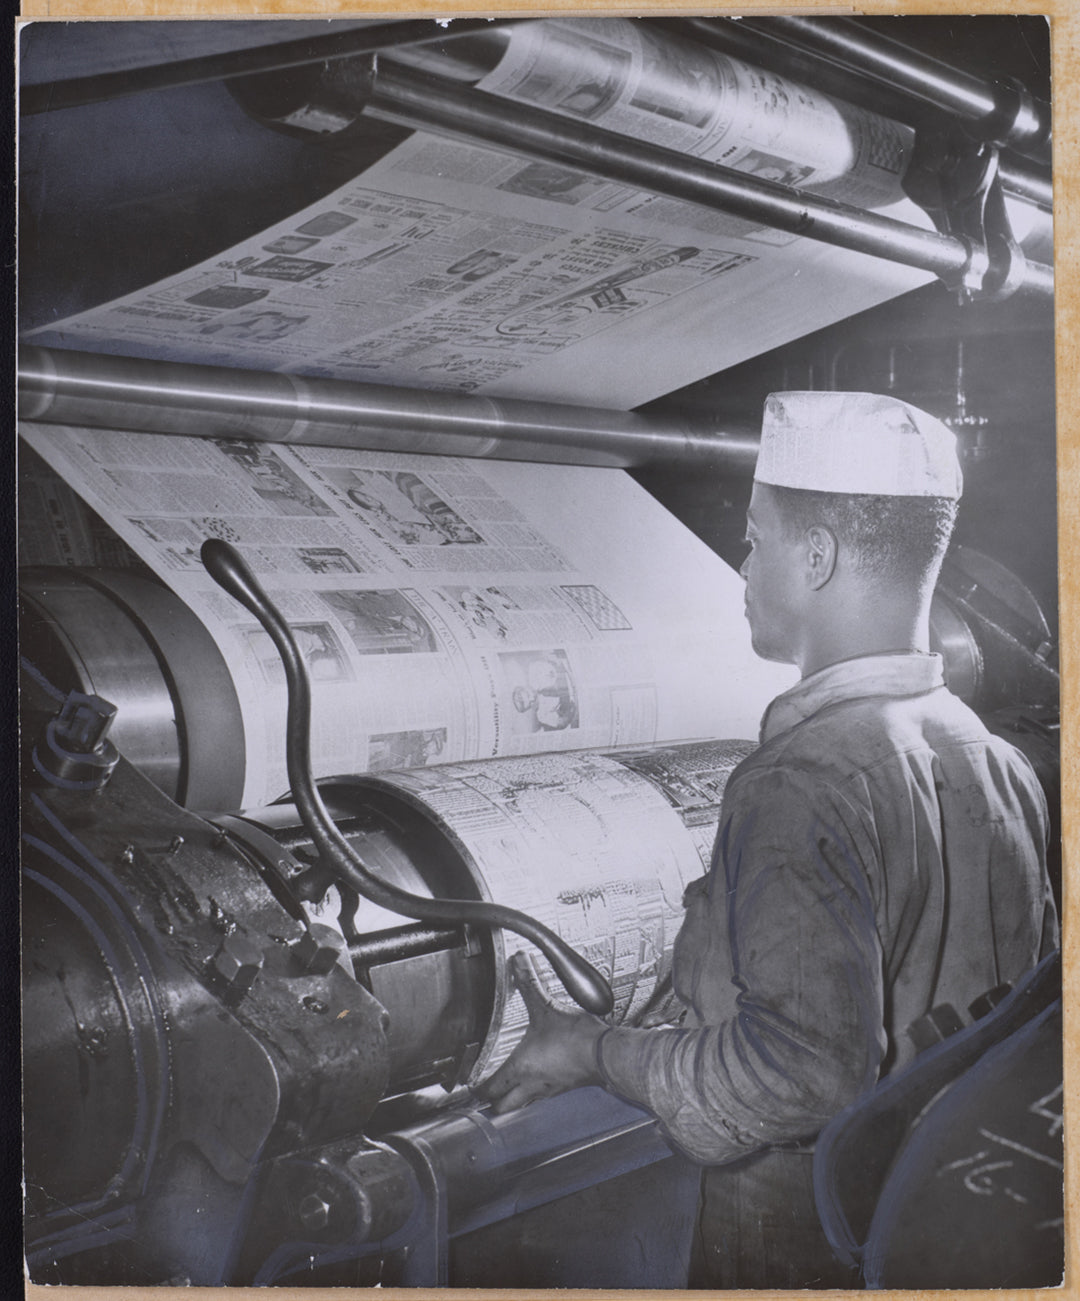 vintage photo of AFRO press operator